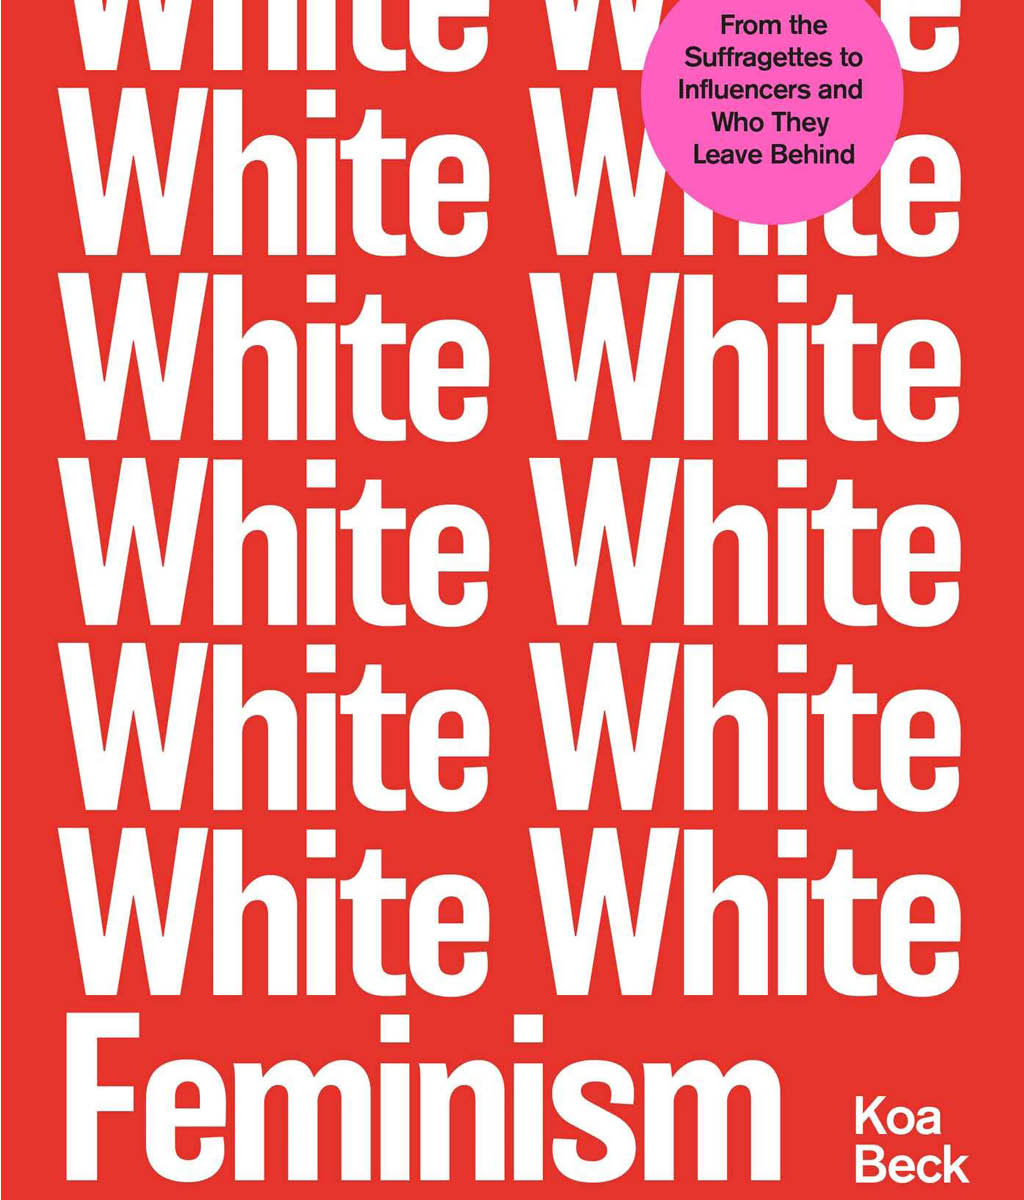 White Feminism by Koa Beck